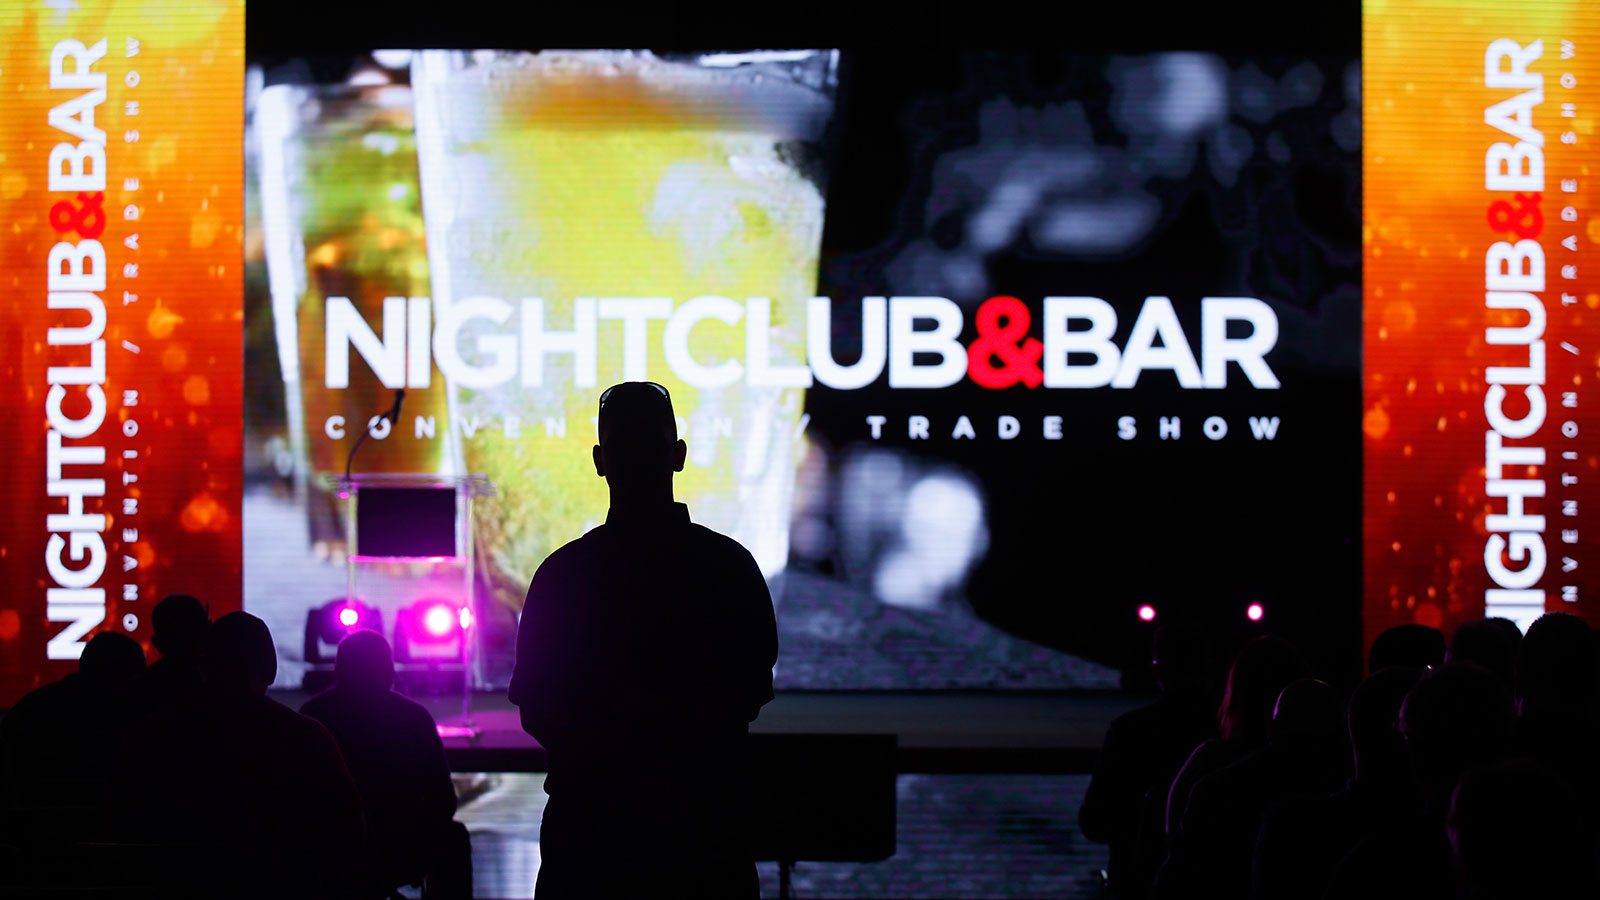 Nightclub & Bar Conference